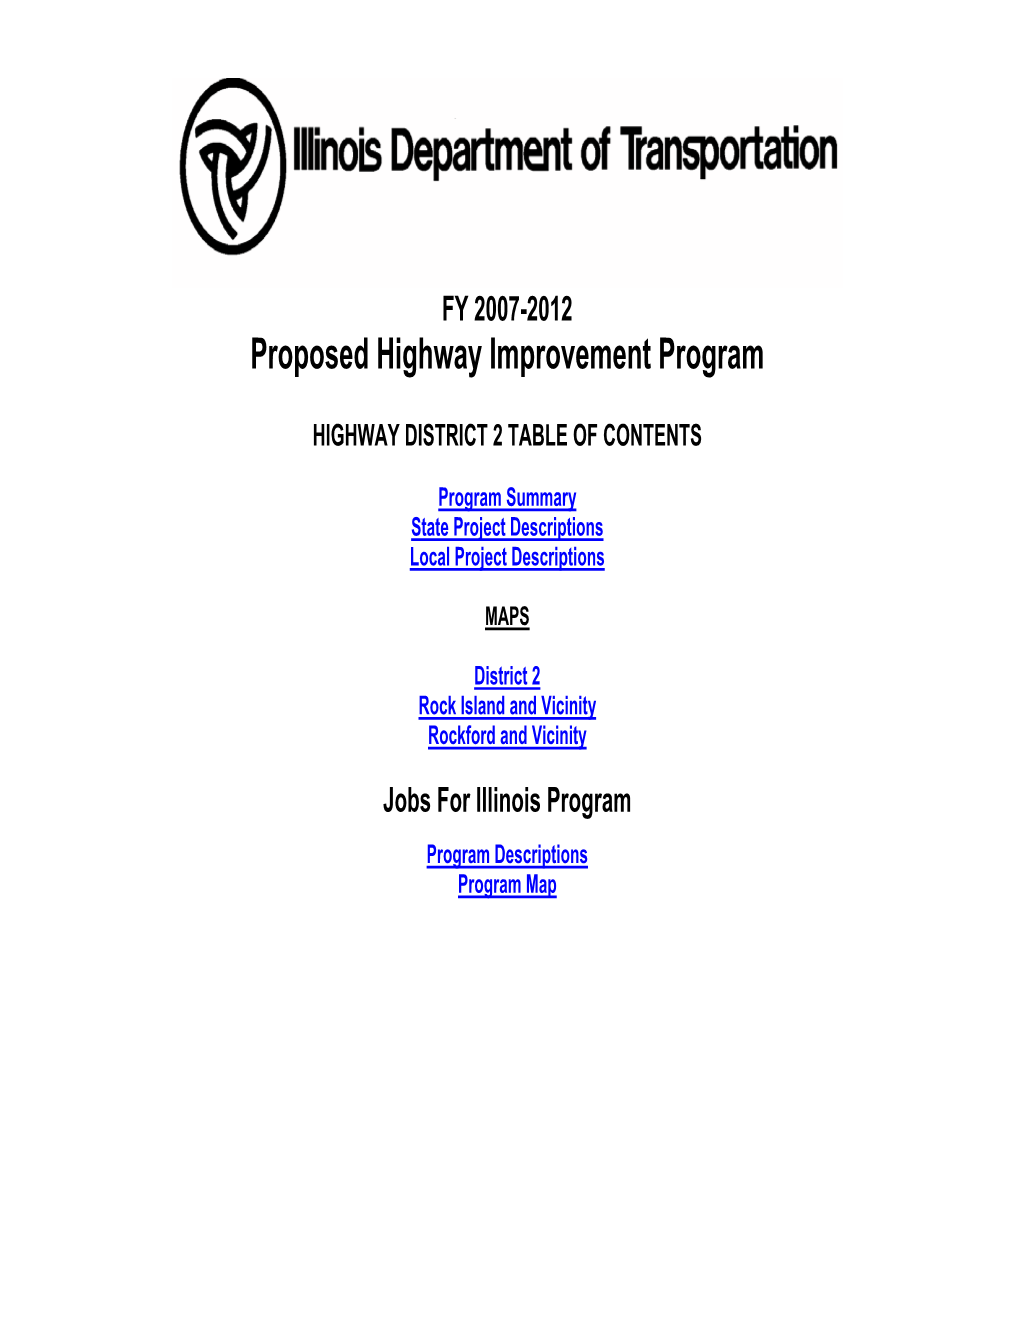 Proposed Highway Improvement Program